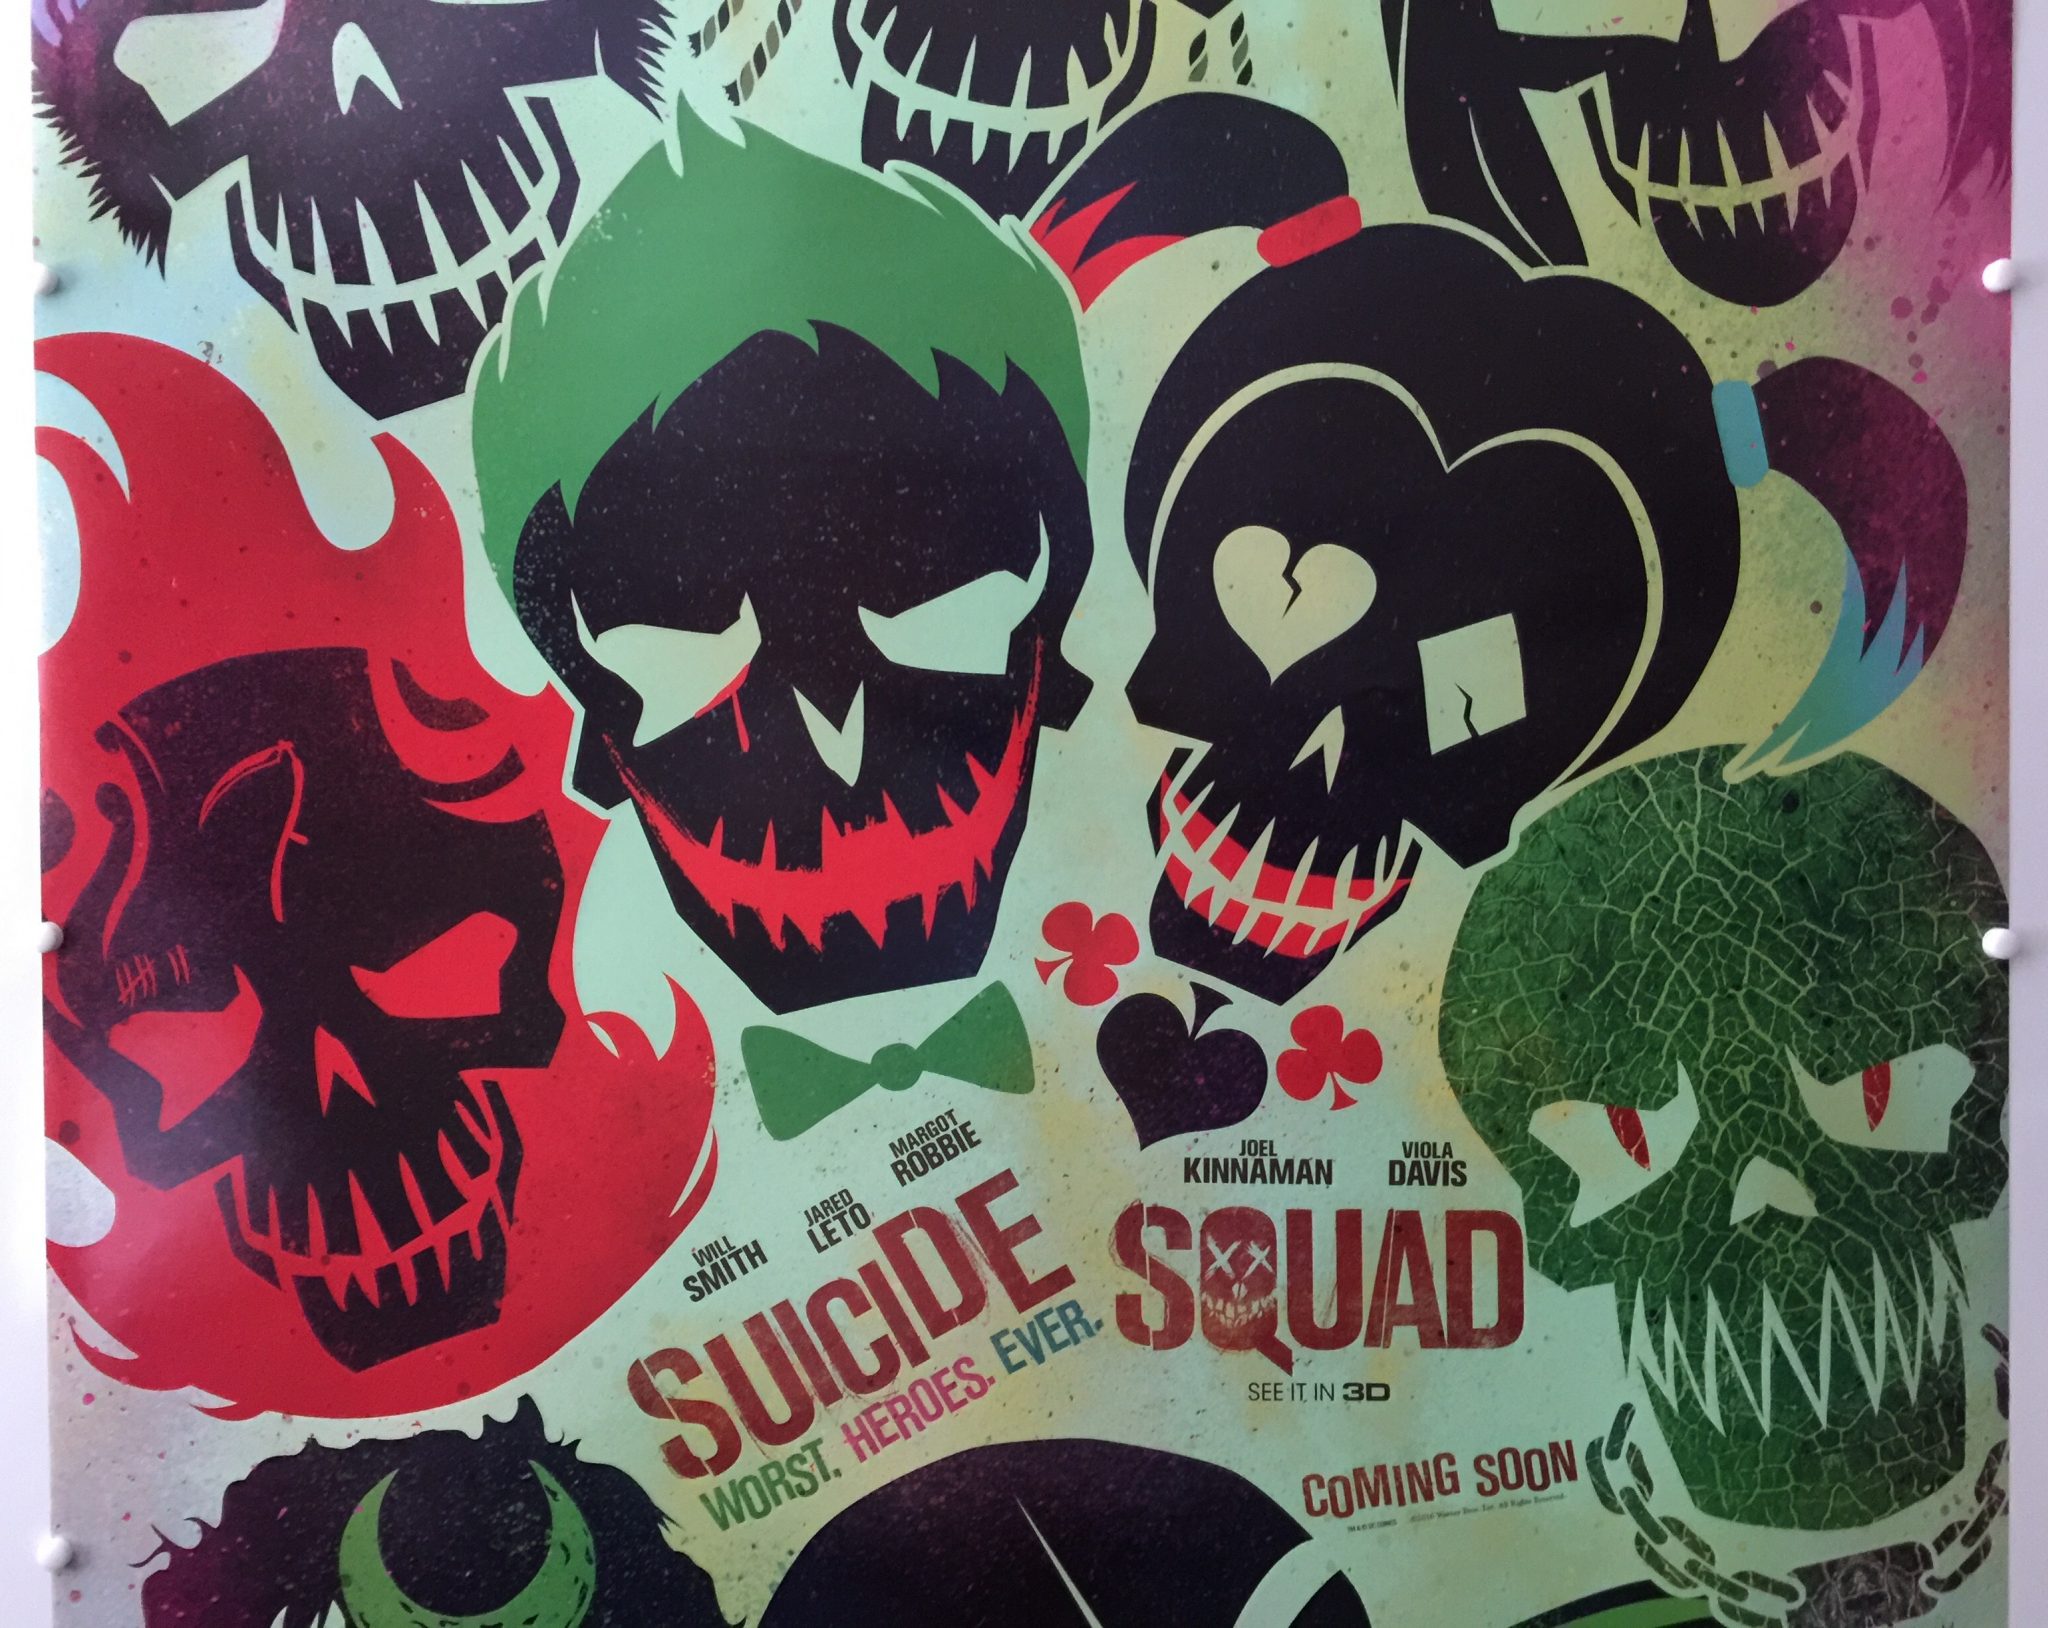 Suicide squad special. Постер отряд самоубийц. Отряд самоубийц poster. Отряд самоубийц плакат. Отряд самоубийц черепа.